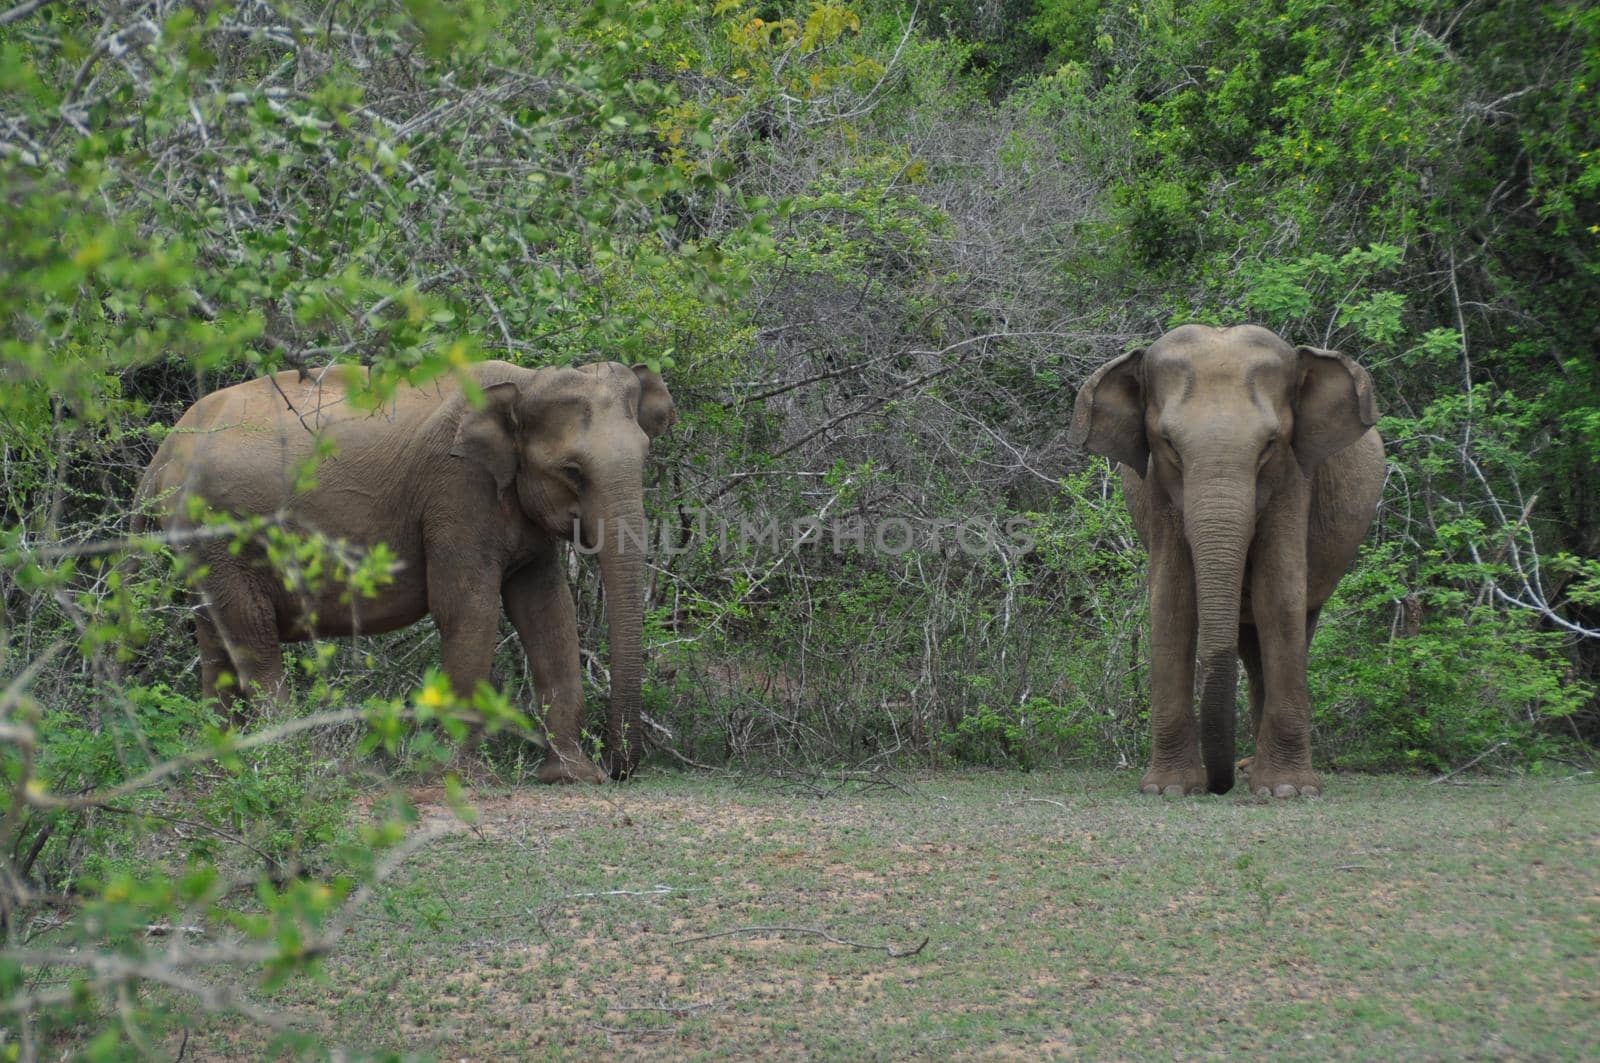 Elephants in Yala National Park, Sri Lanka.